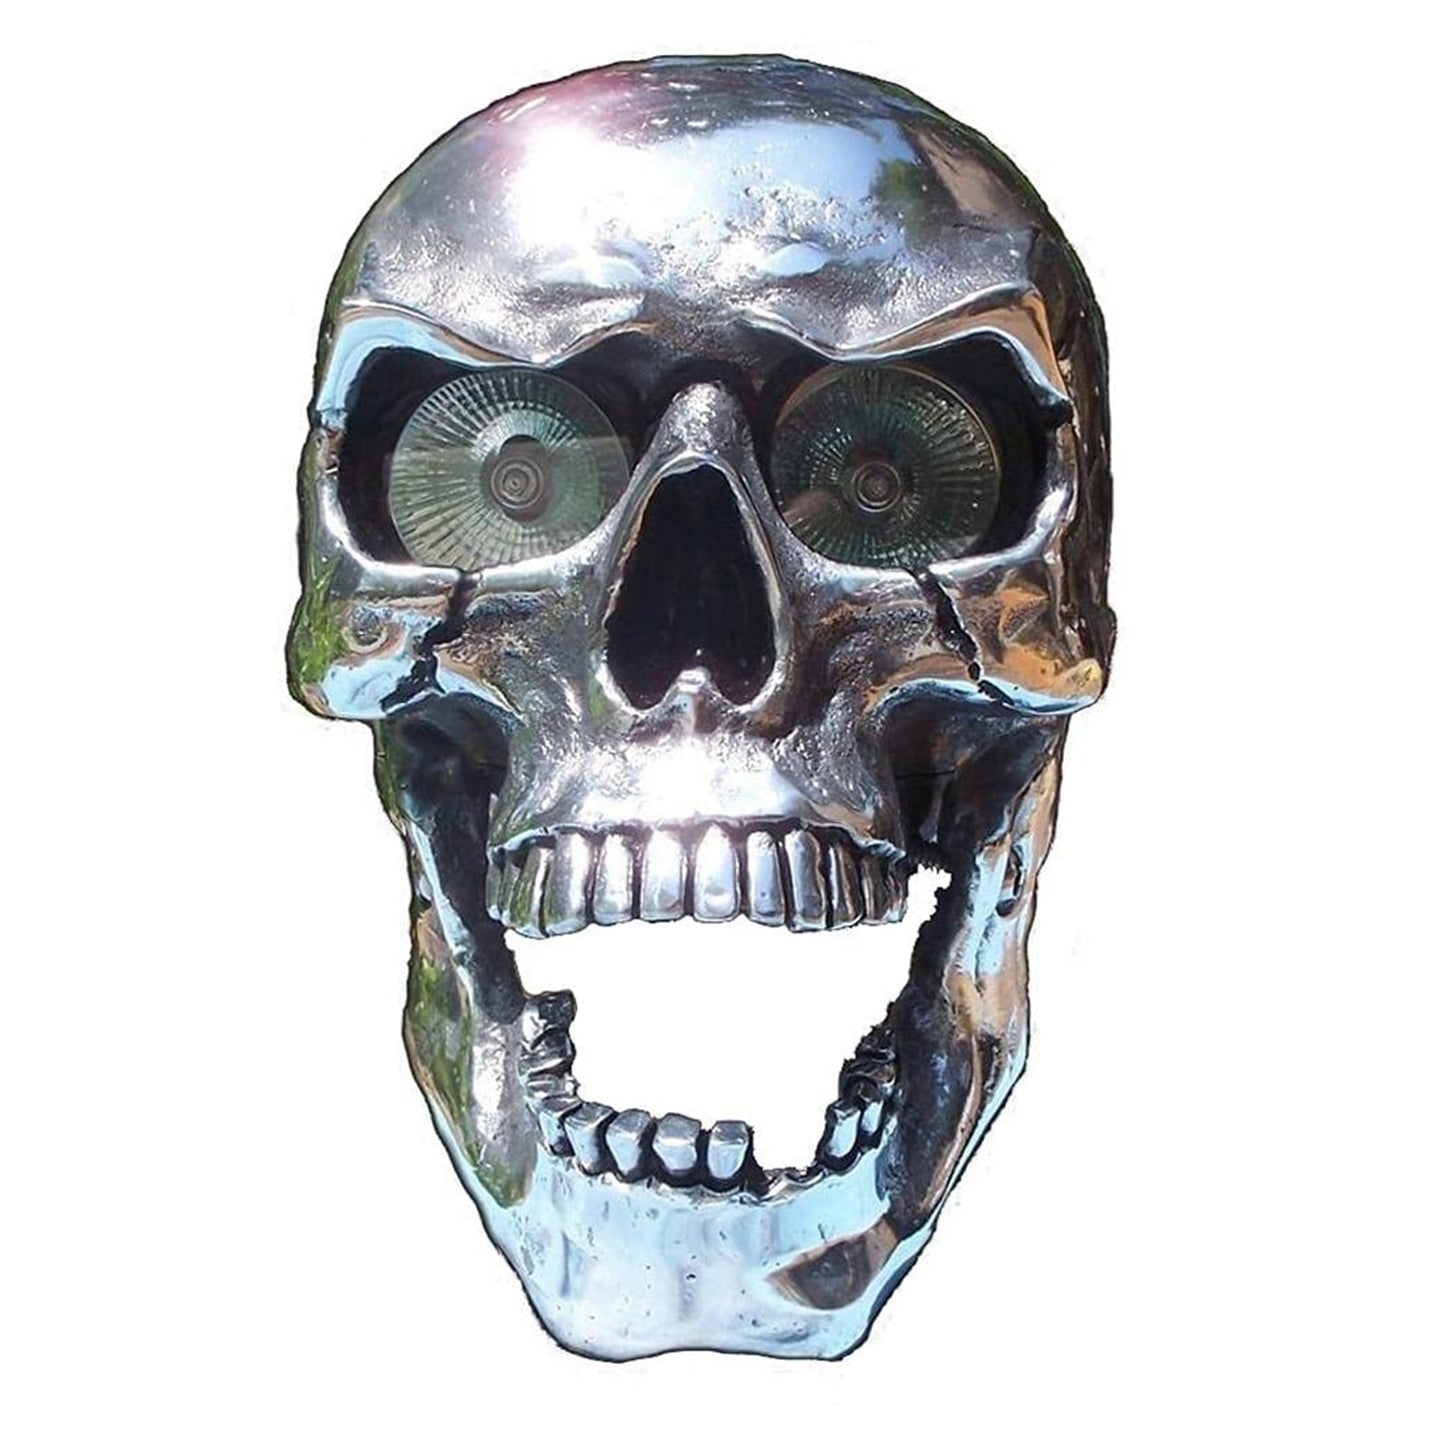 Motorcycle Skull Headlight At The Real HeadLight